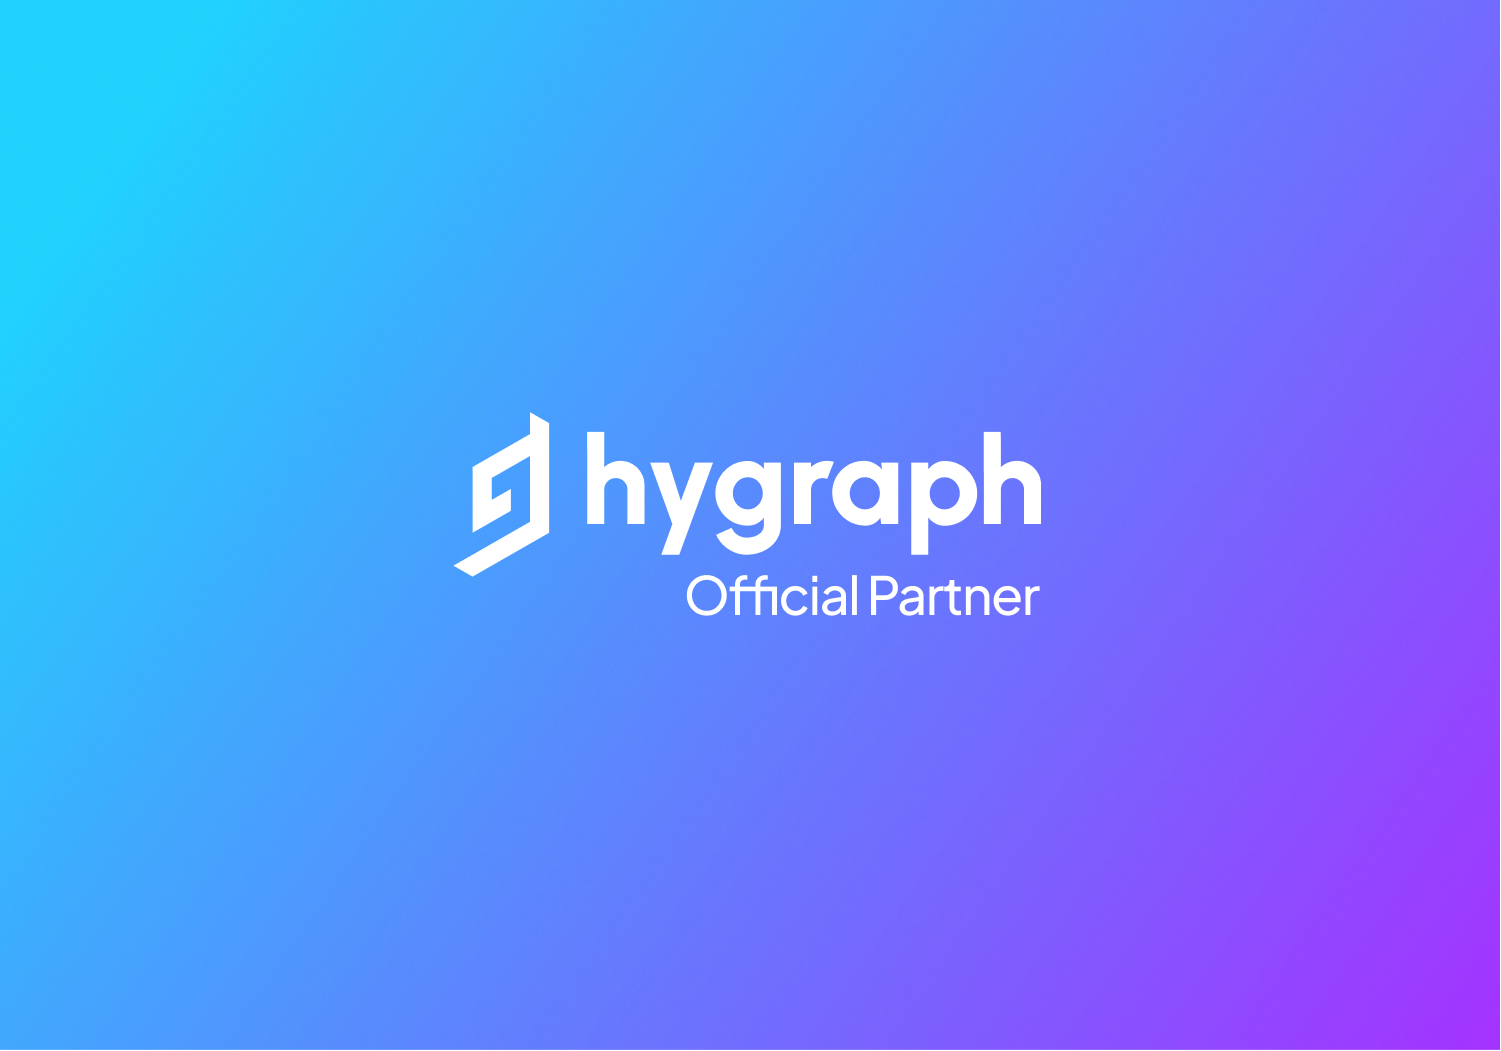 Hygraph partner badge on a blue gradient background